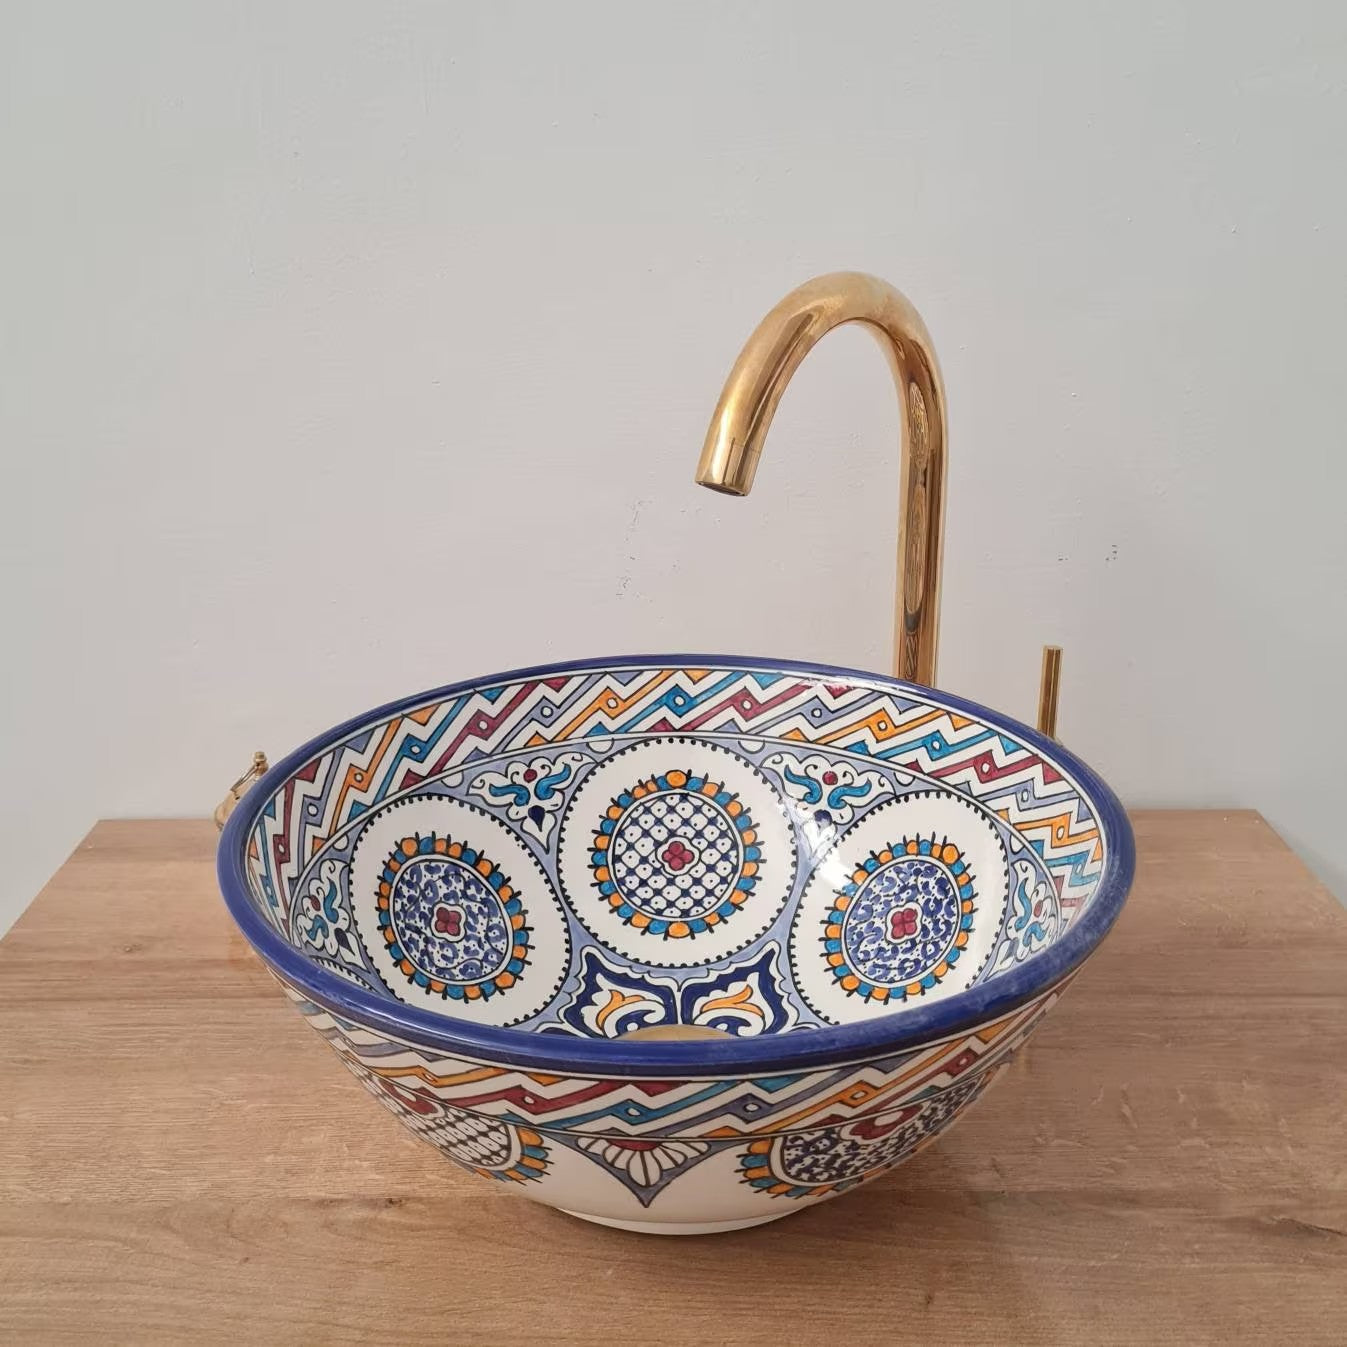 Moroccan sink | moroccan ceramic sink | bathroom sink | moroccan bathroom basin | moroccan sink bowl | Moroccan sink bowl #42